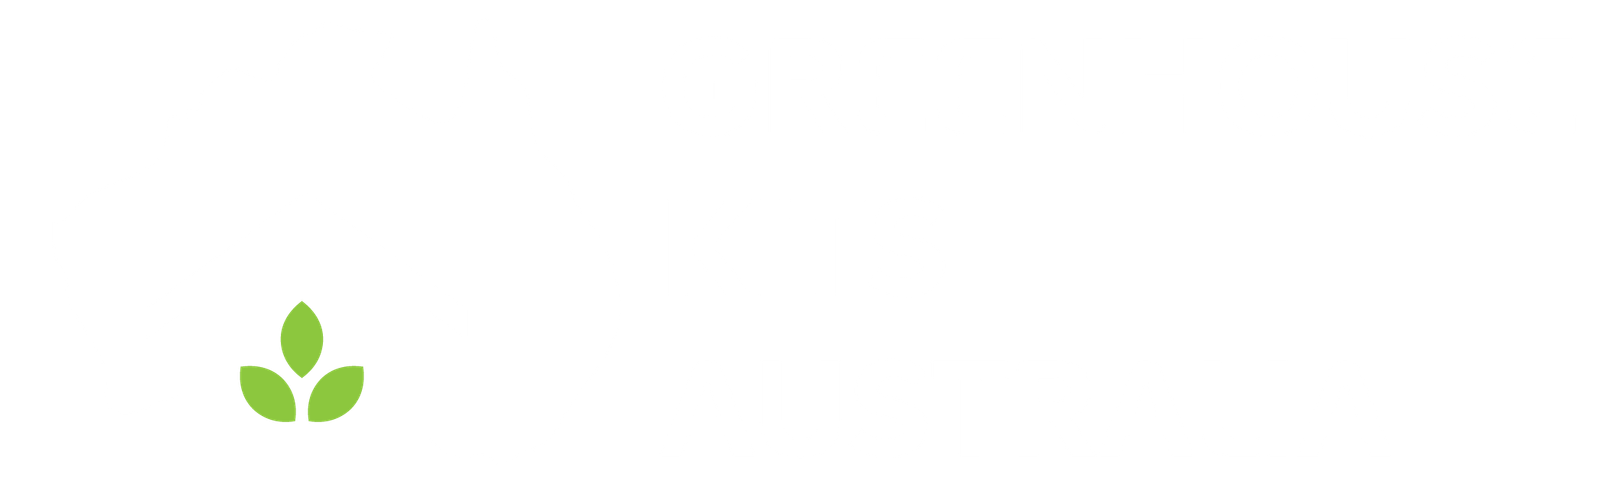 Buy Greenhouses Online Australia | Greenhouse Kits For Sale Australia